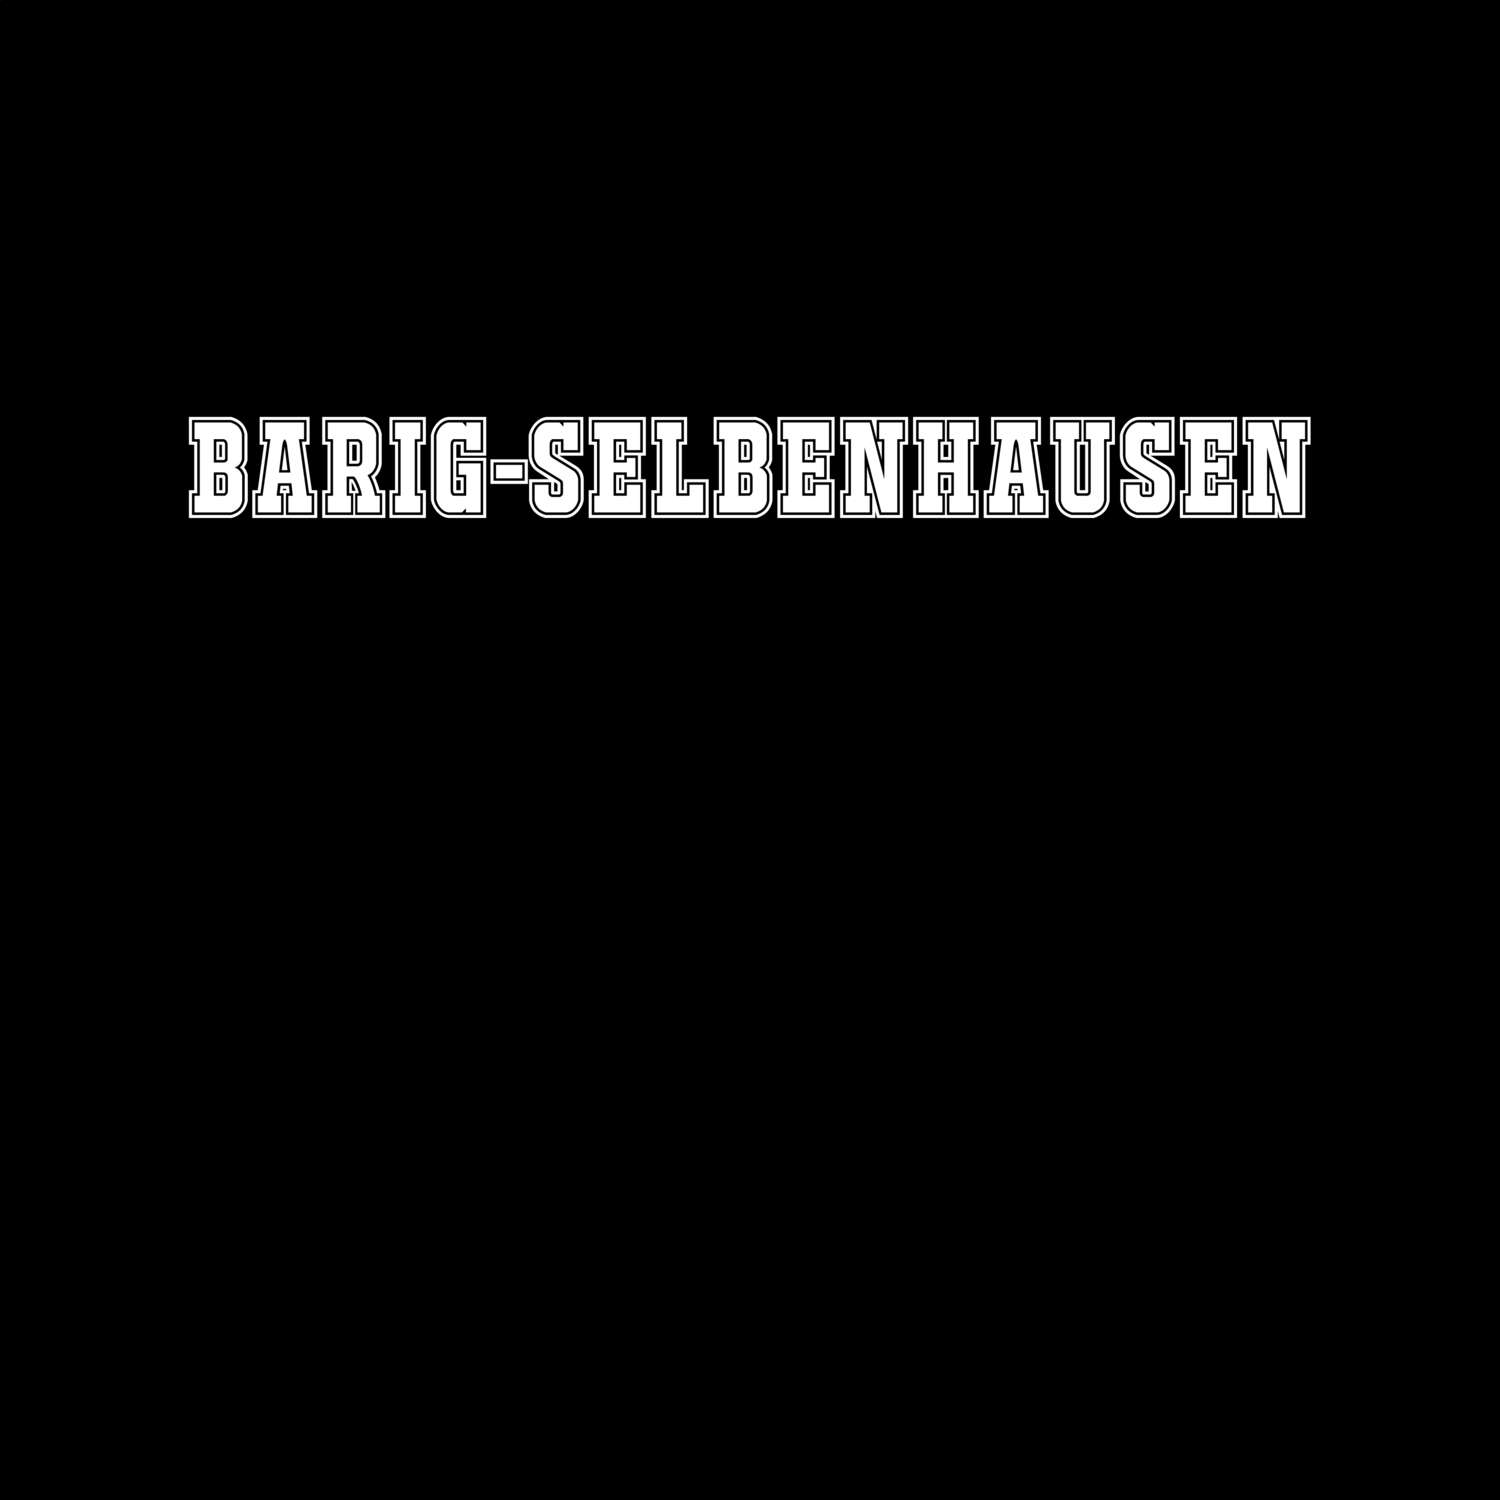 Barig-Selbenhausen T-Shirt »Classic«